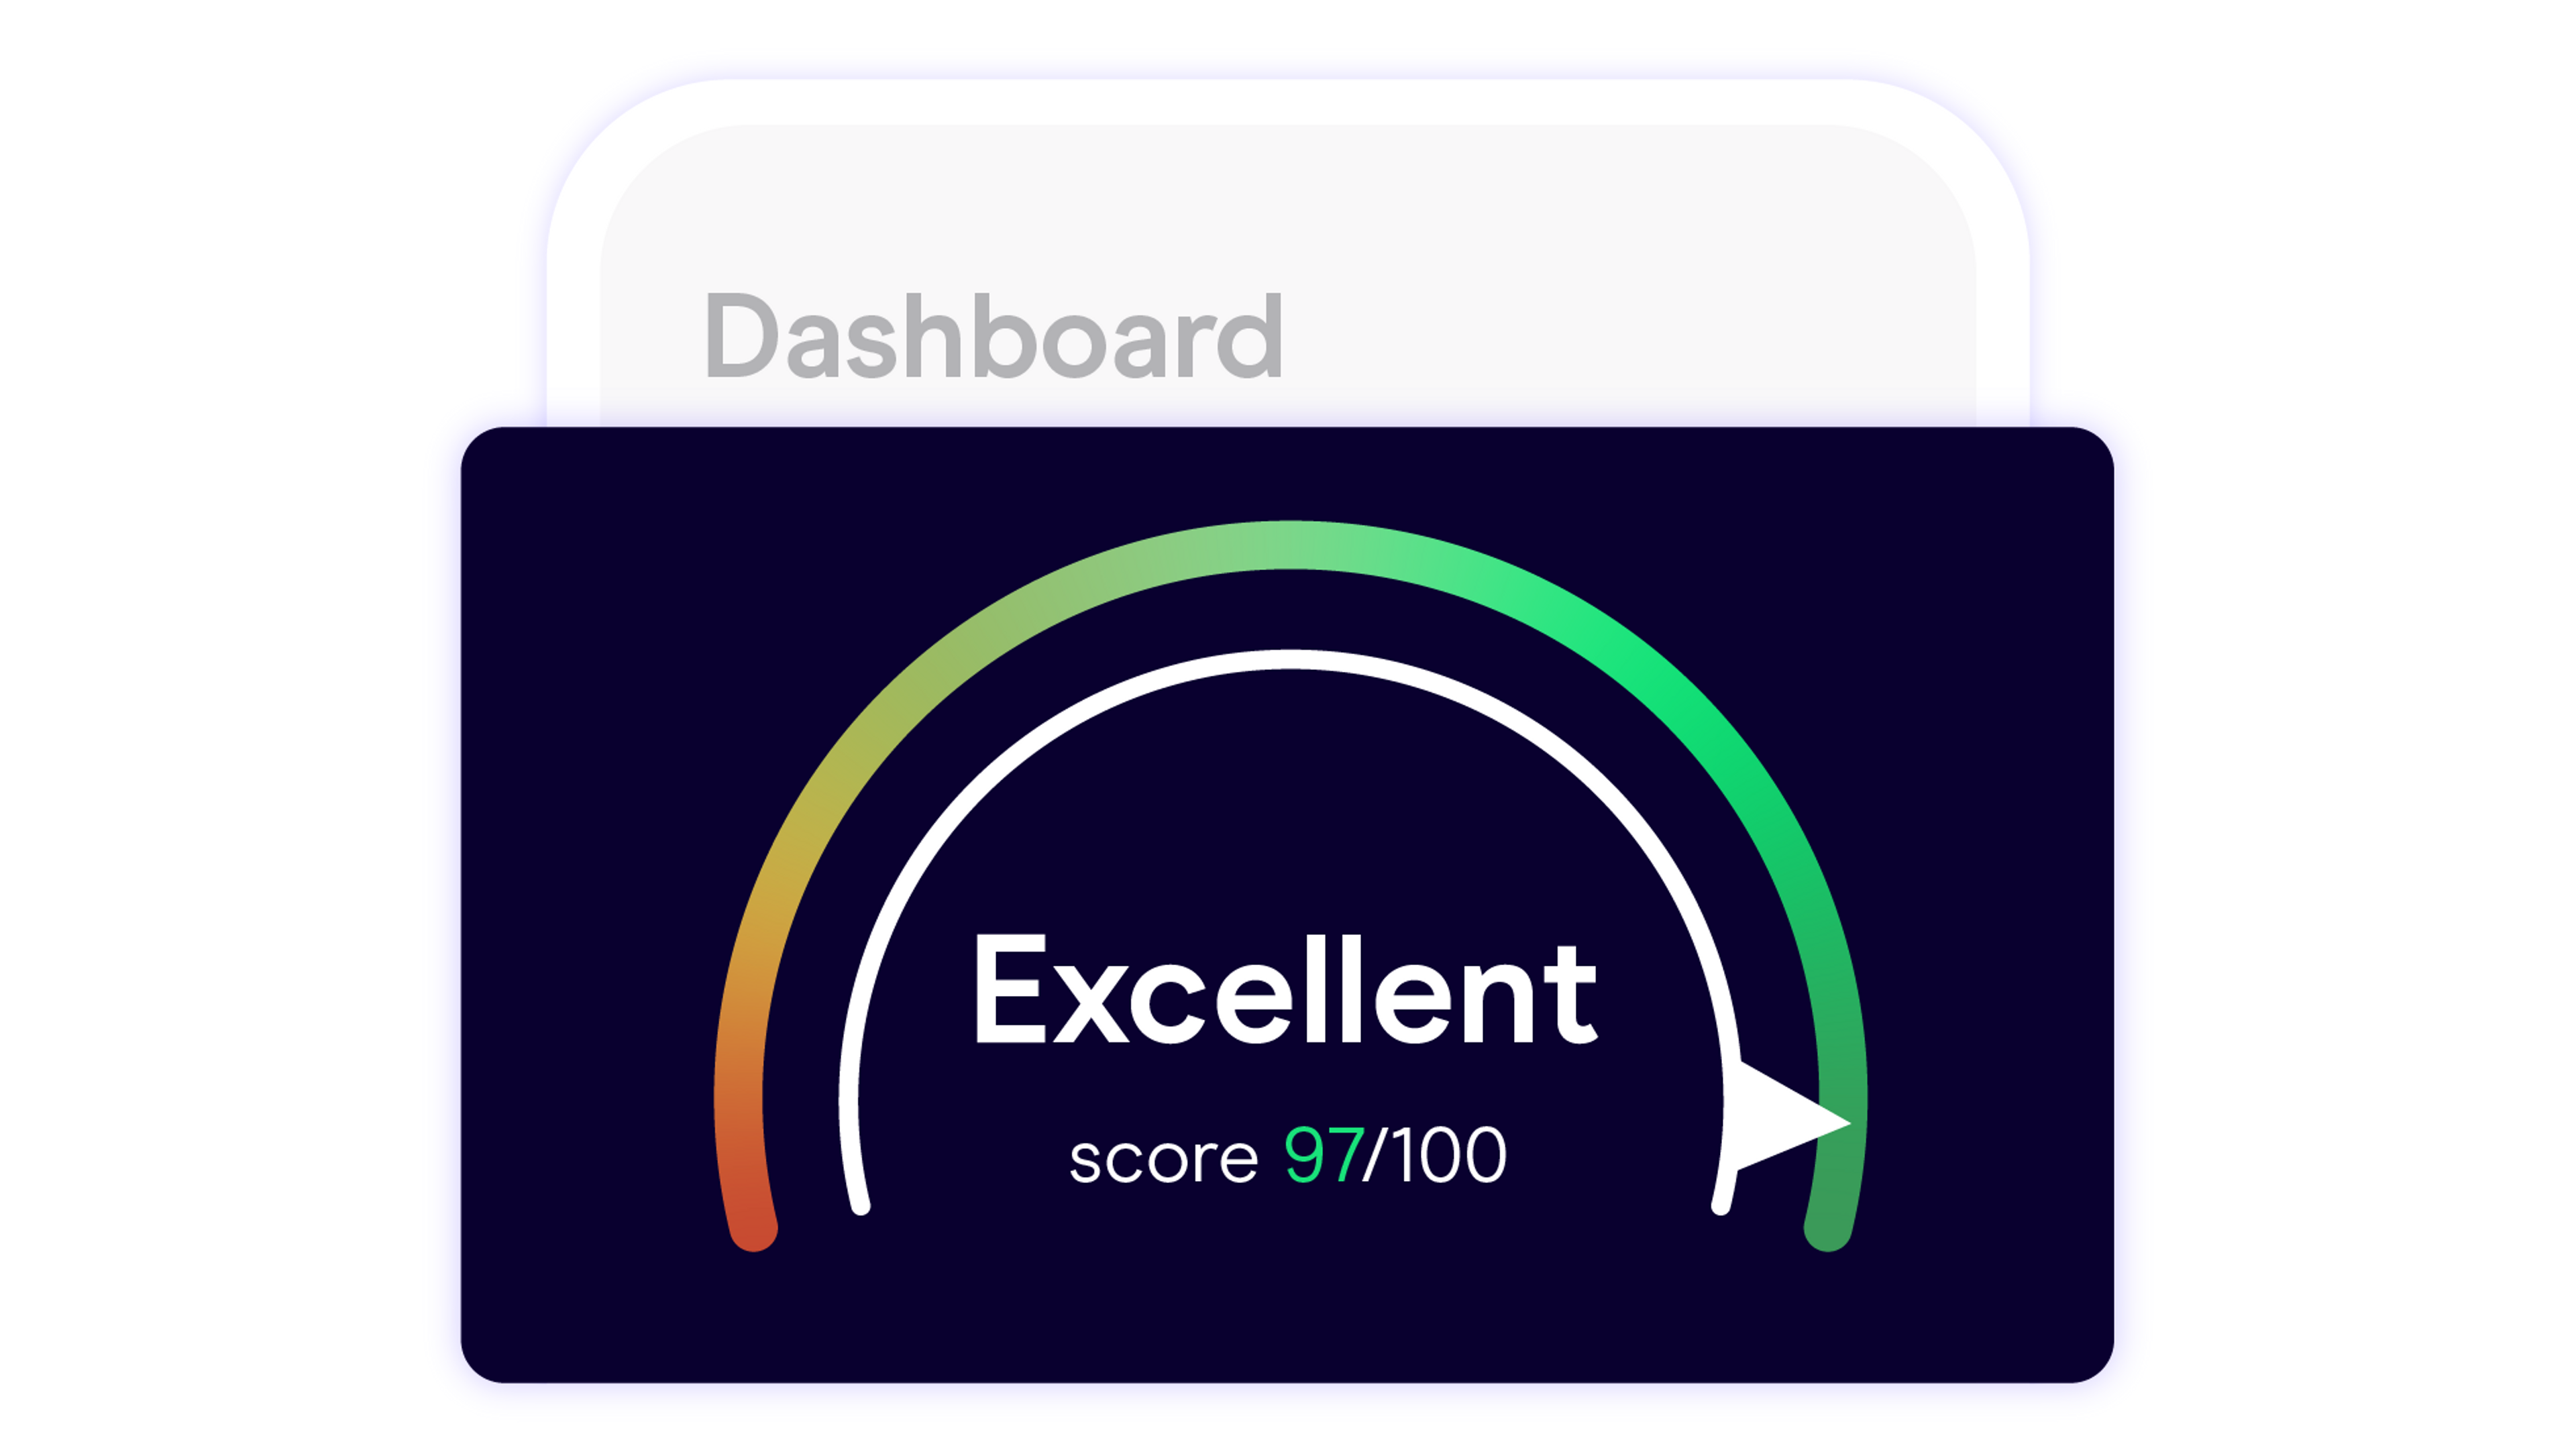 Sense app dashboard showing driver score as excellent